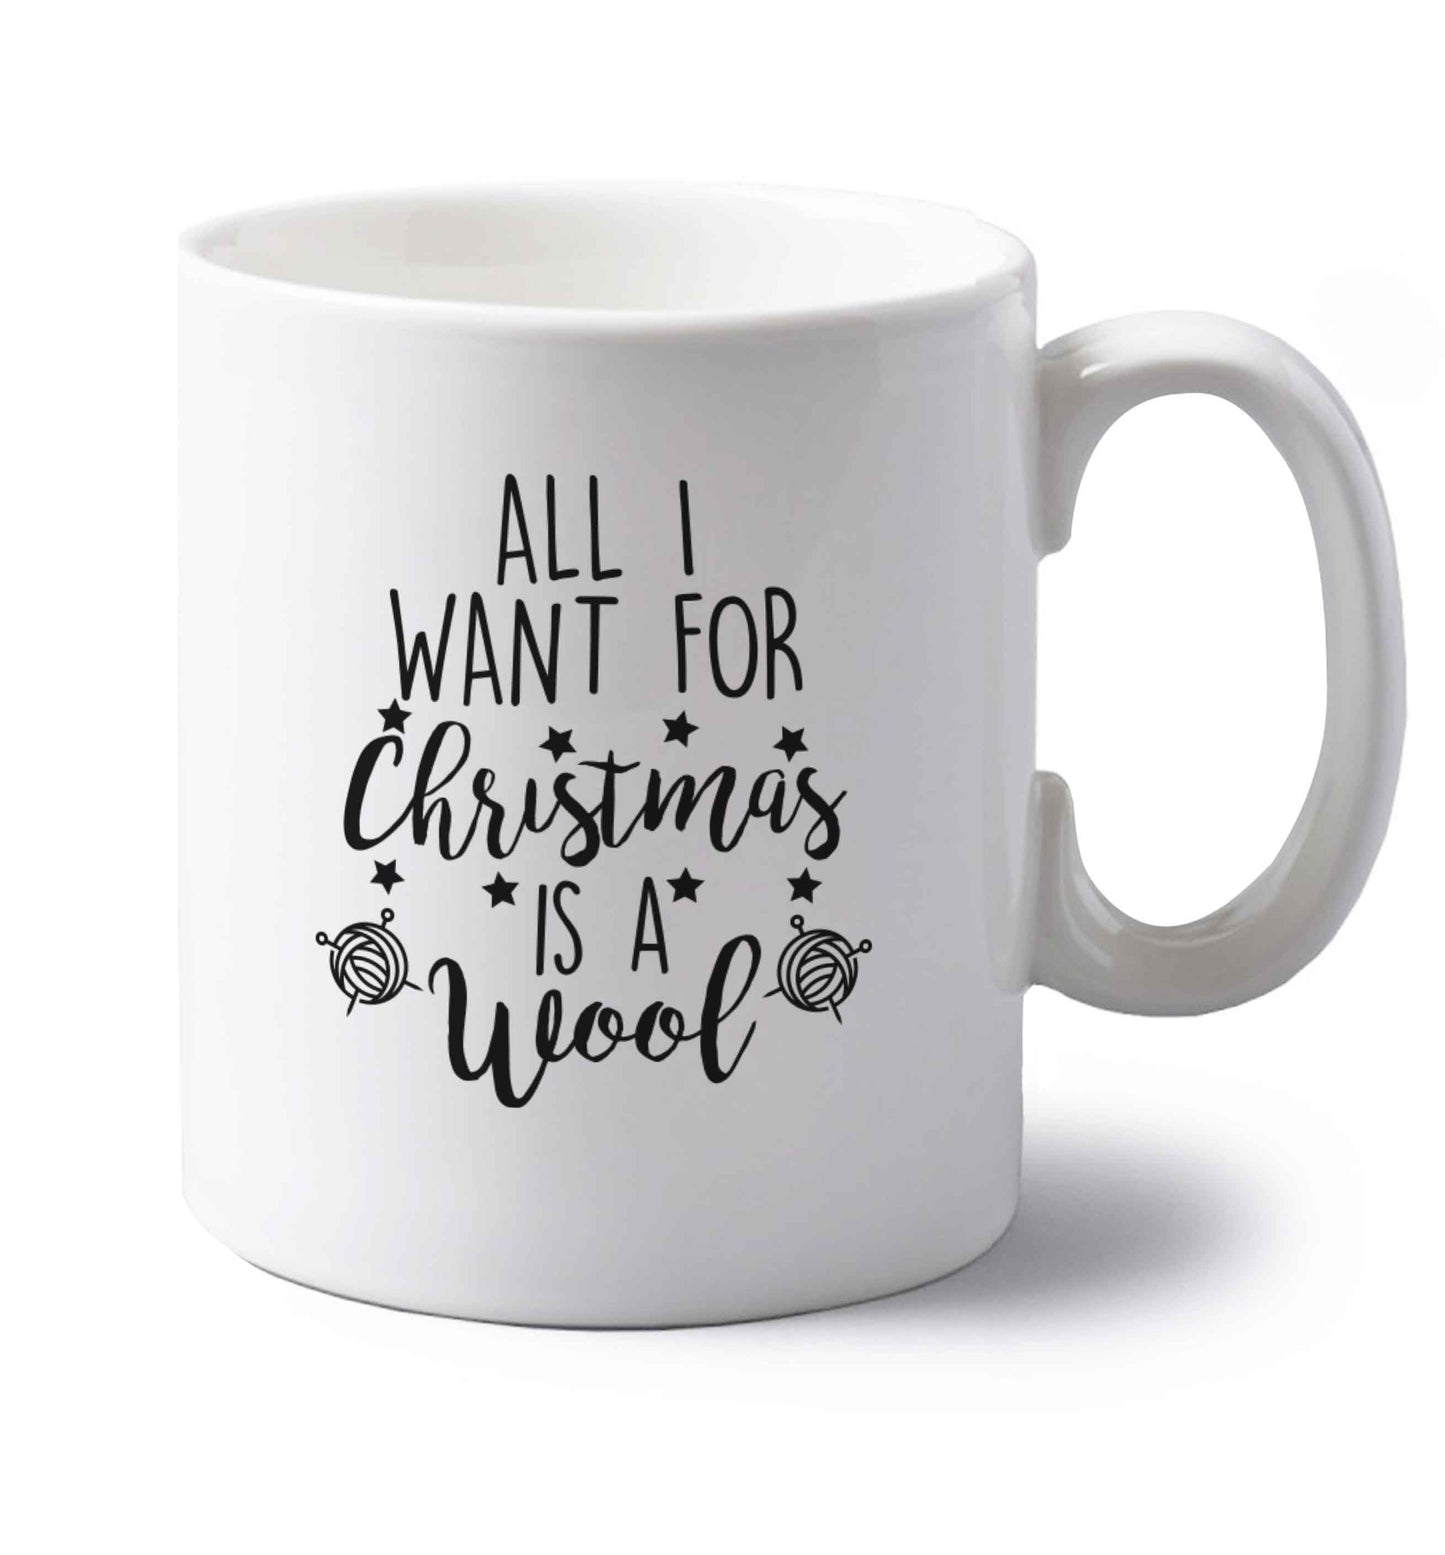 All I want for Christmas is wool! left handed white ceramic mug 